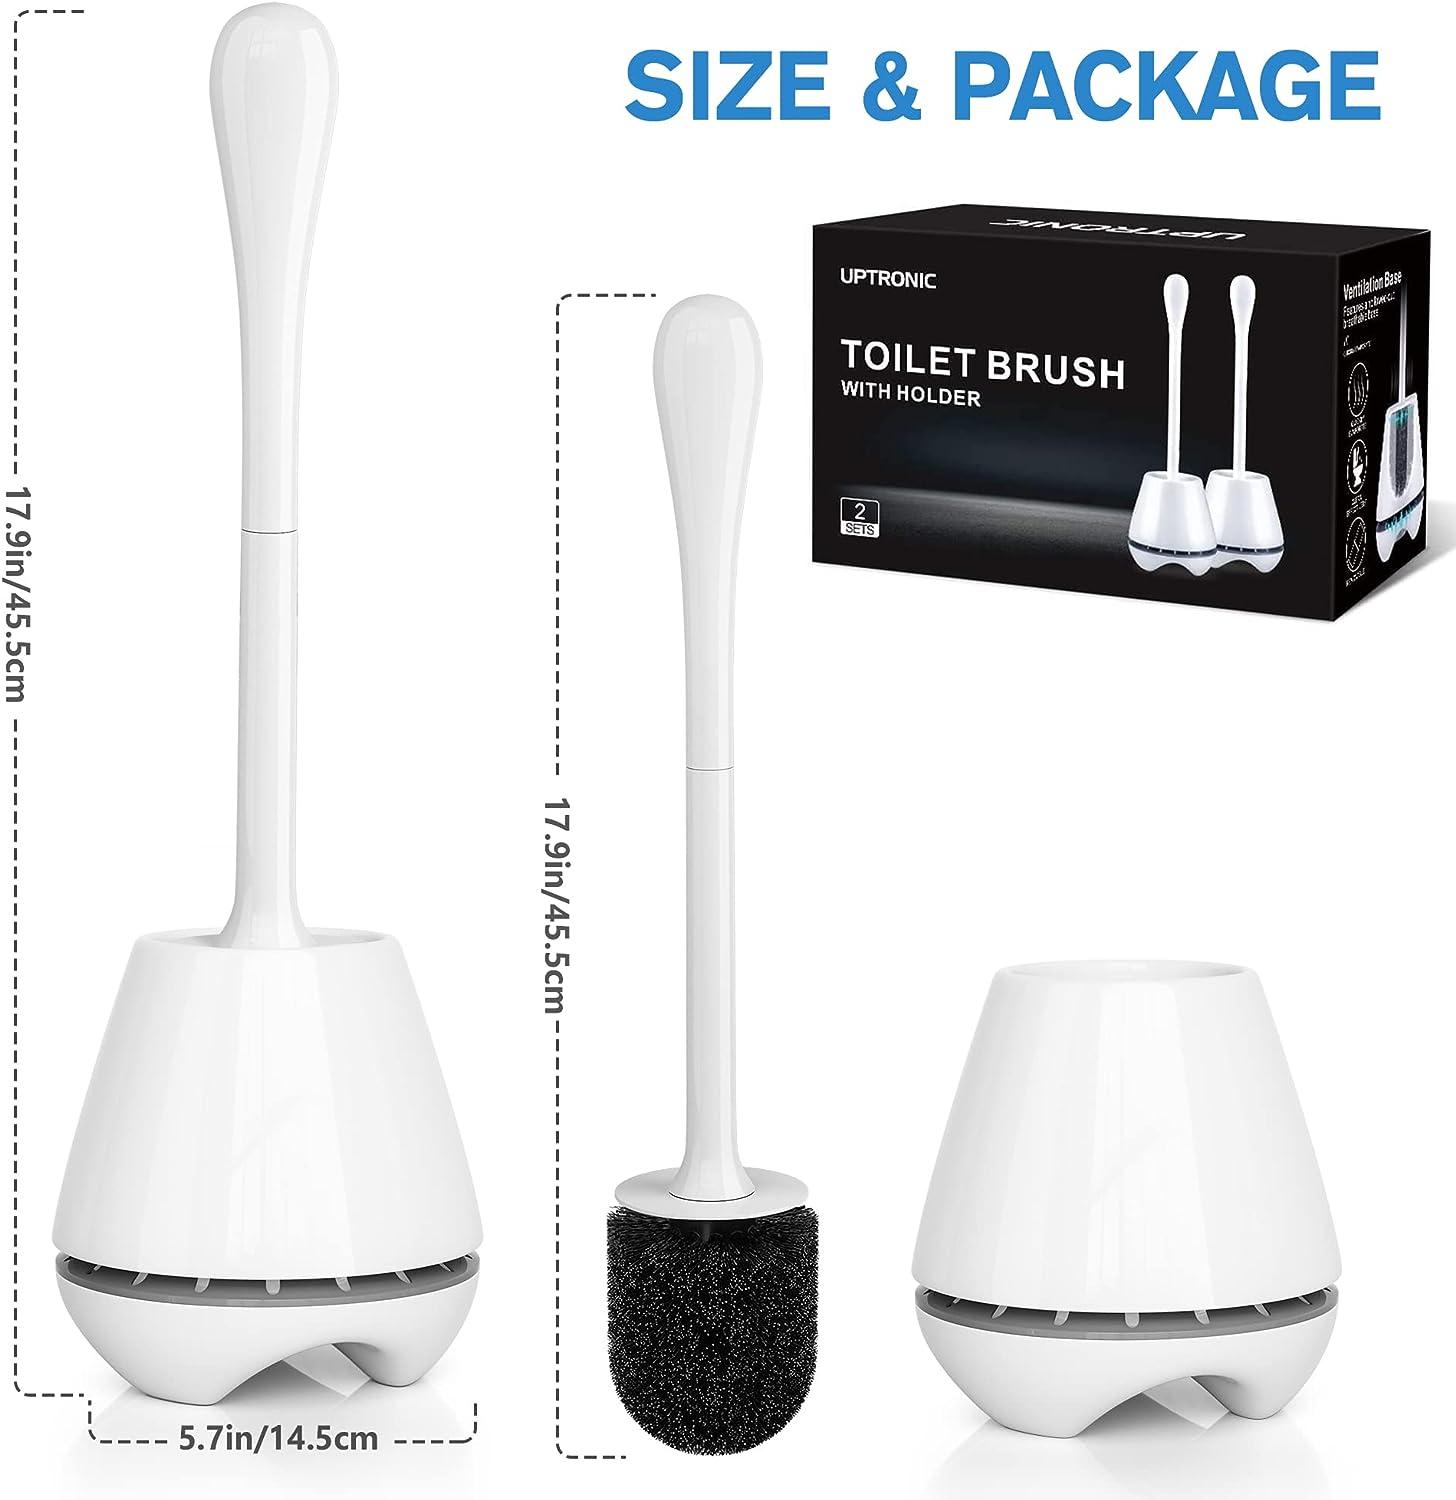 uptronic Toilet Brush and Holder 2 Pack, Toilet Brush with